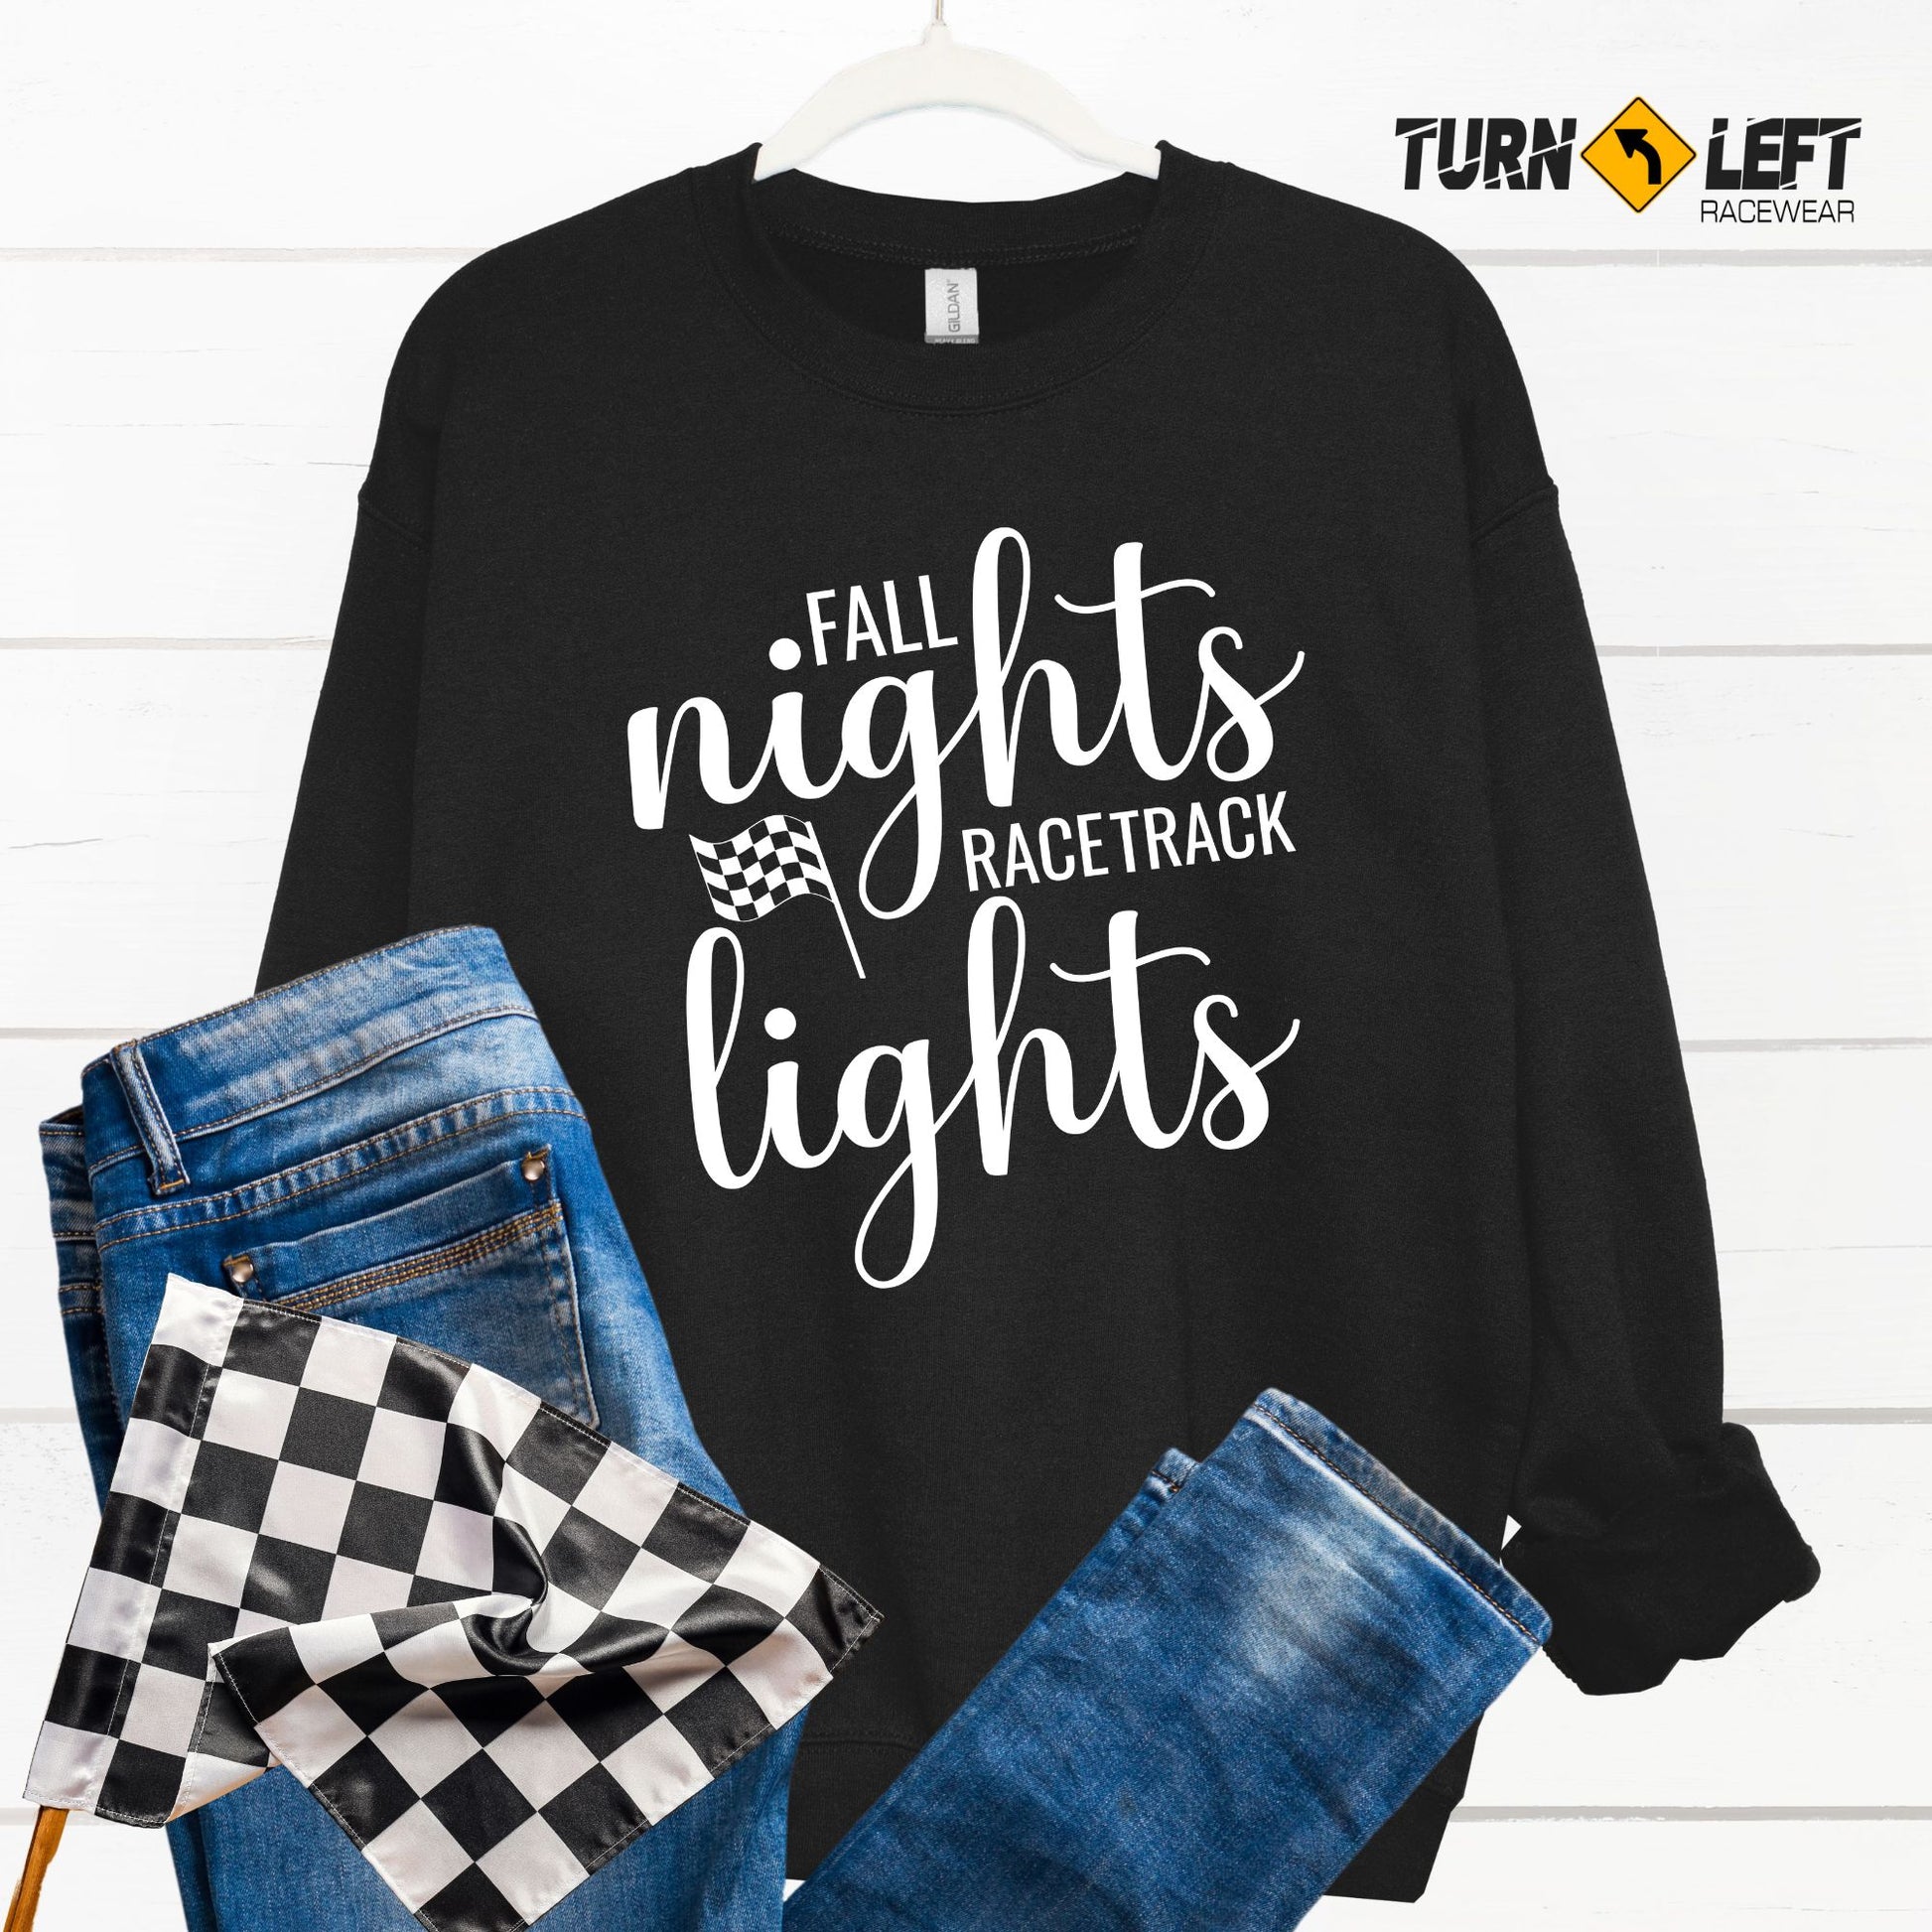 Best Racing Gear Racetrack racewear. Car racing sweatshirt Racing Quote Shirts for women. Fall Nights Racetrack Lights. Turn Left Racing Gear  